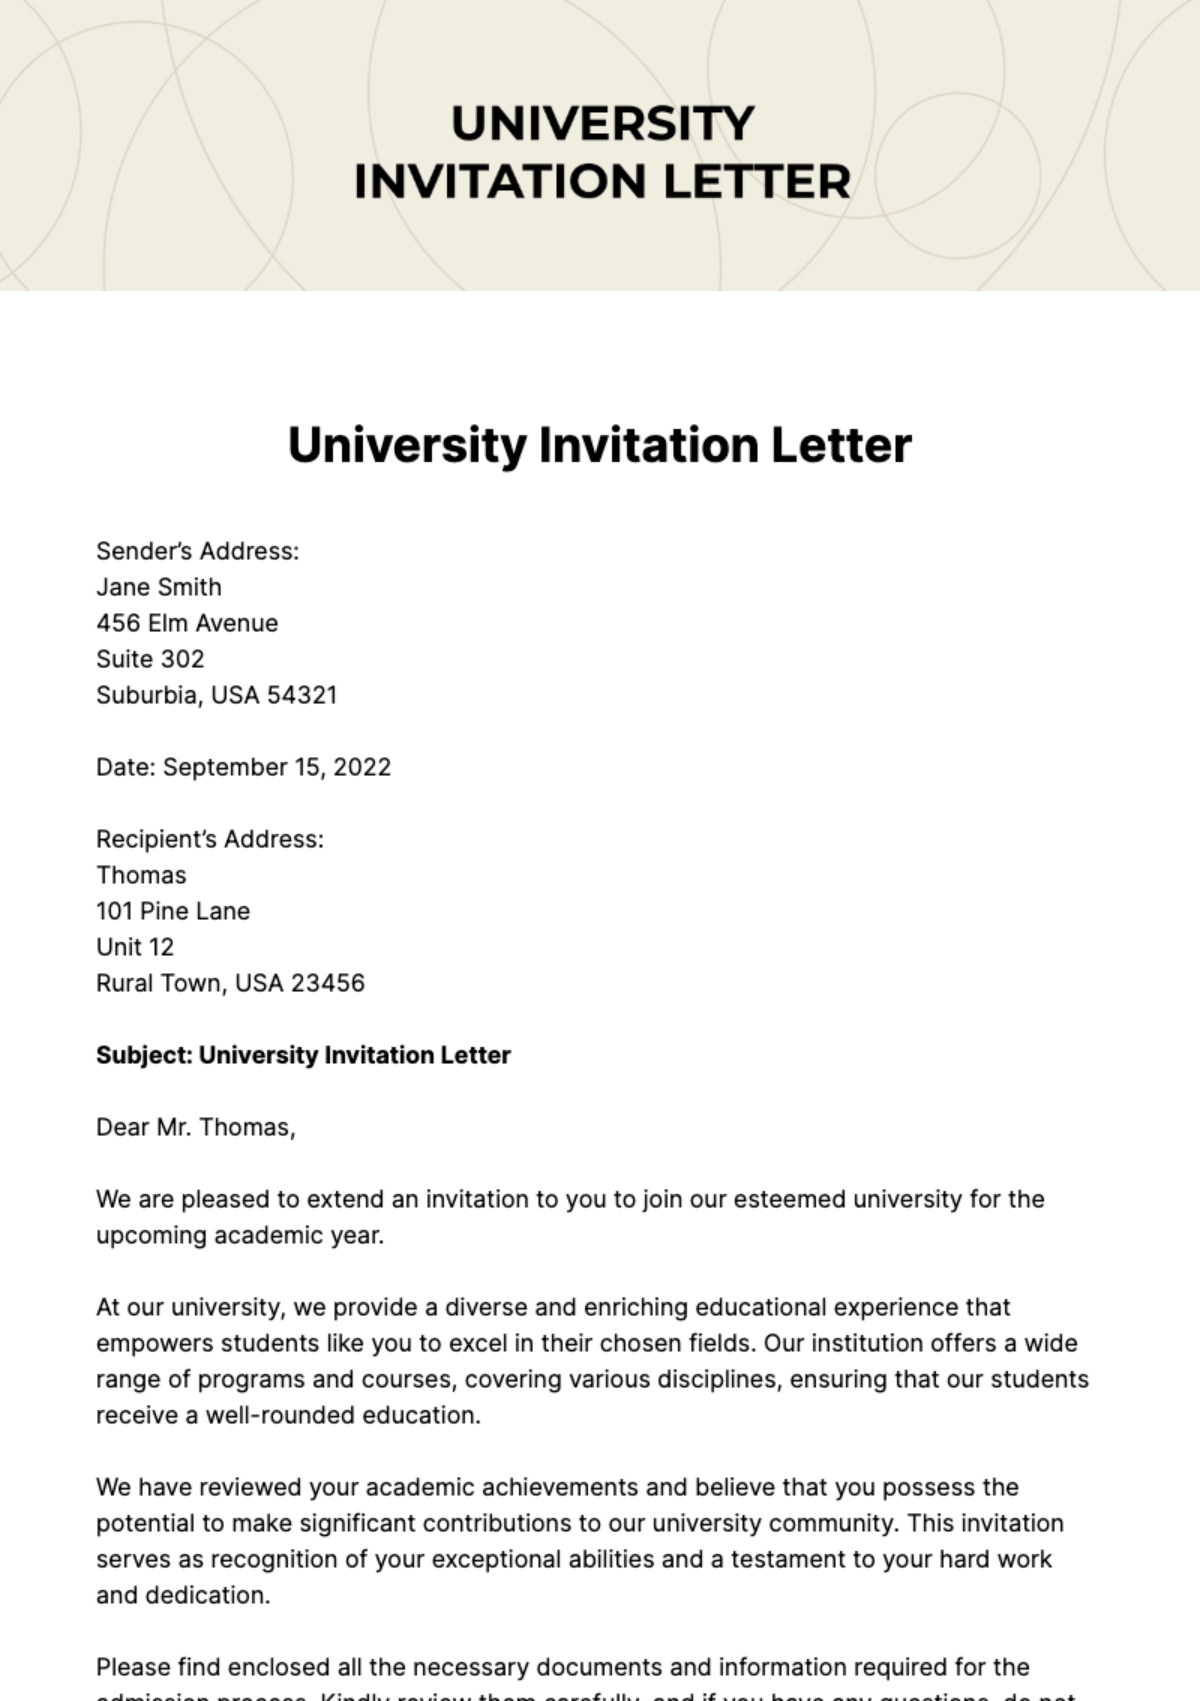 University Invitation Letter Template